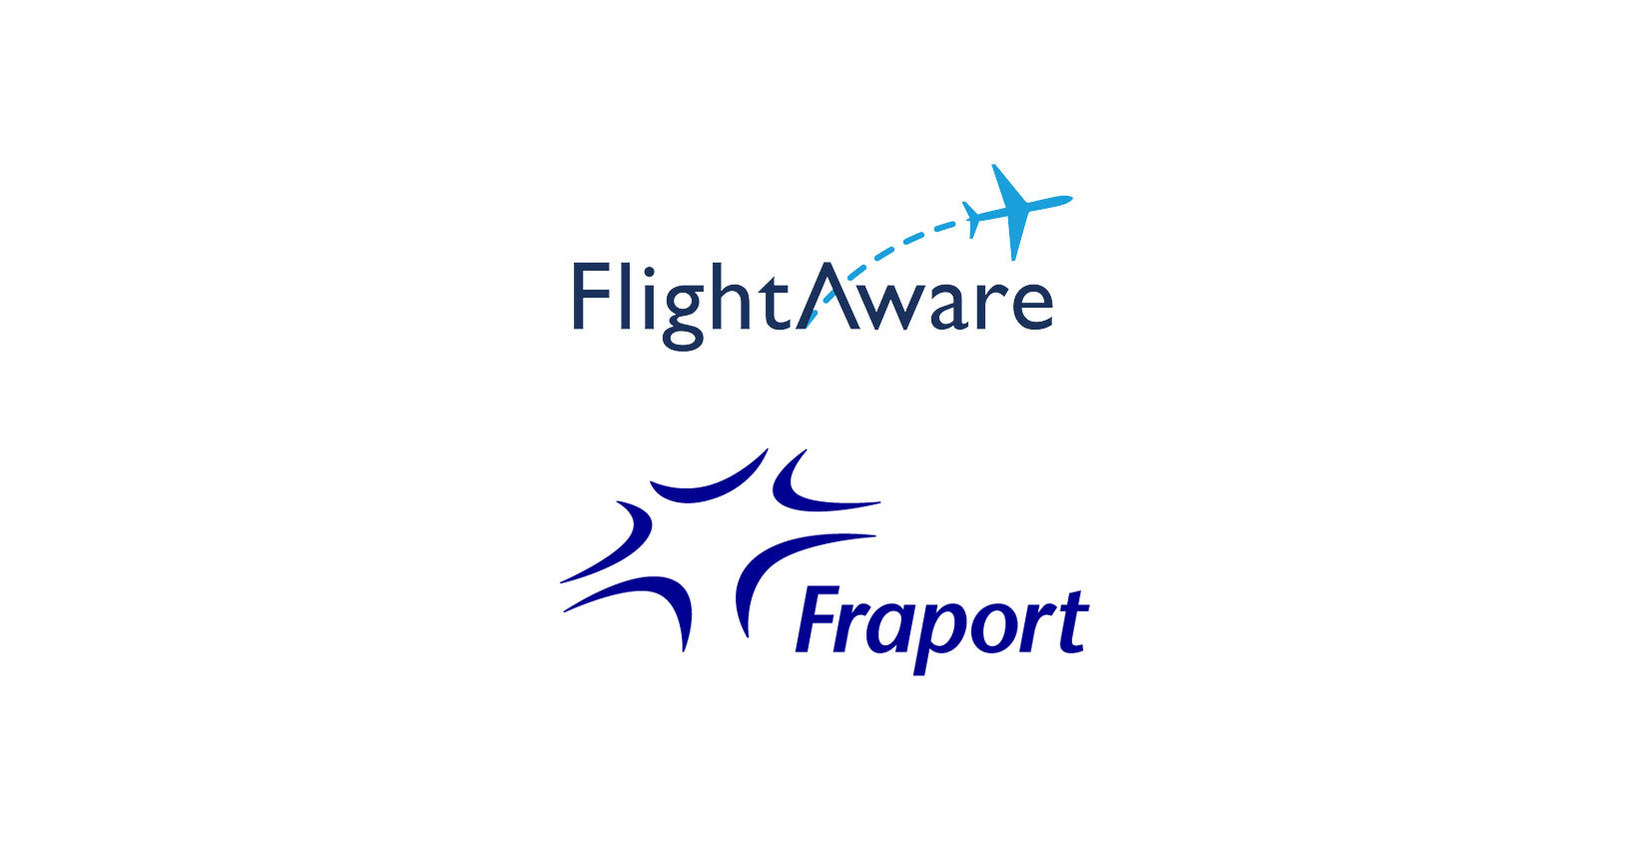 Fraport to Deploy FlightAware Predictive Technology at Frankfurt Airport